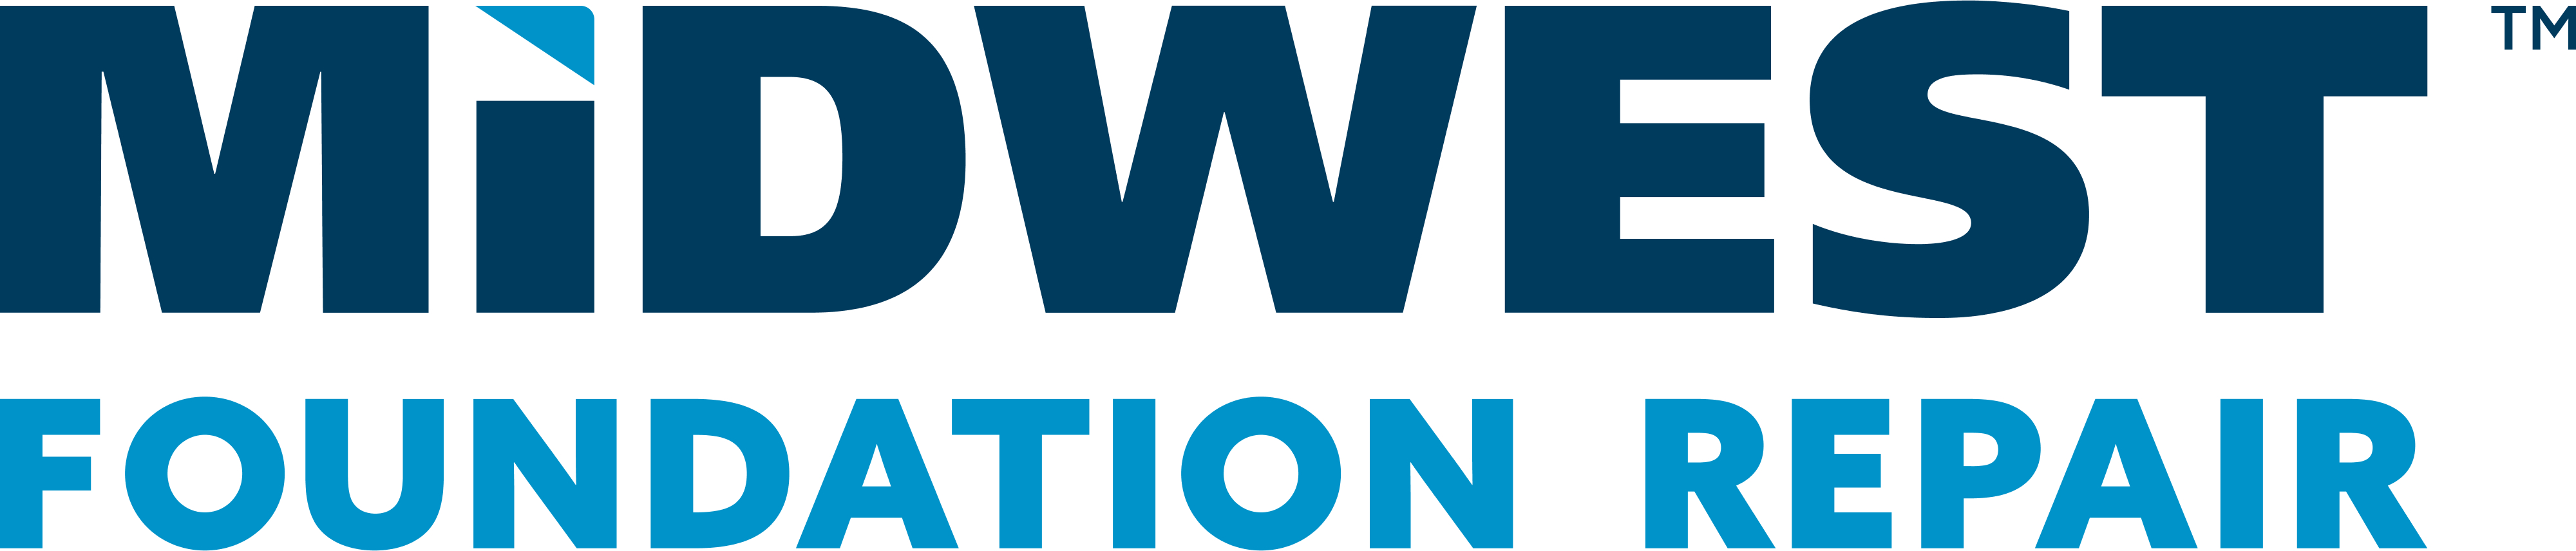 Midwest Foundation Repair logo